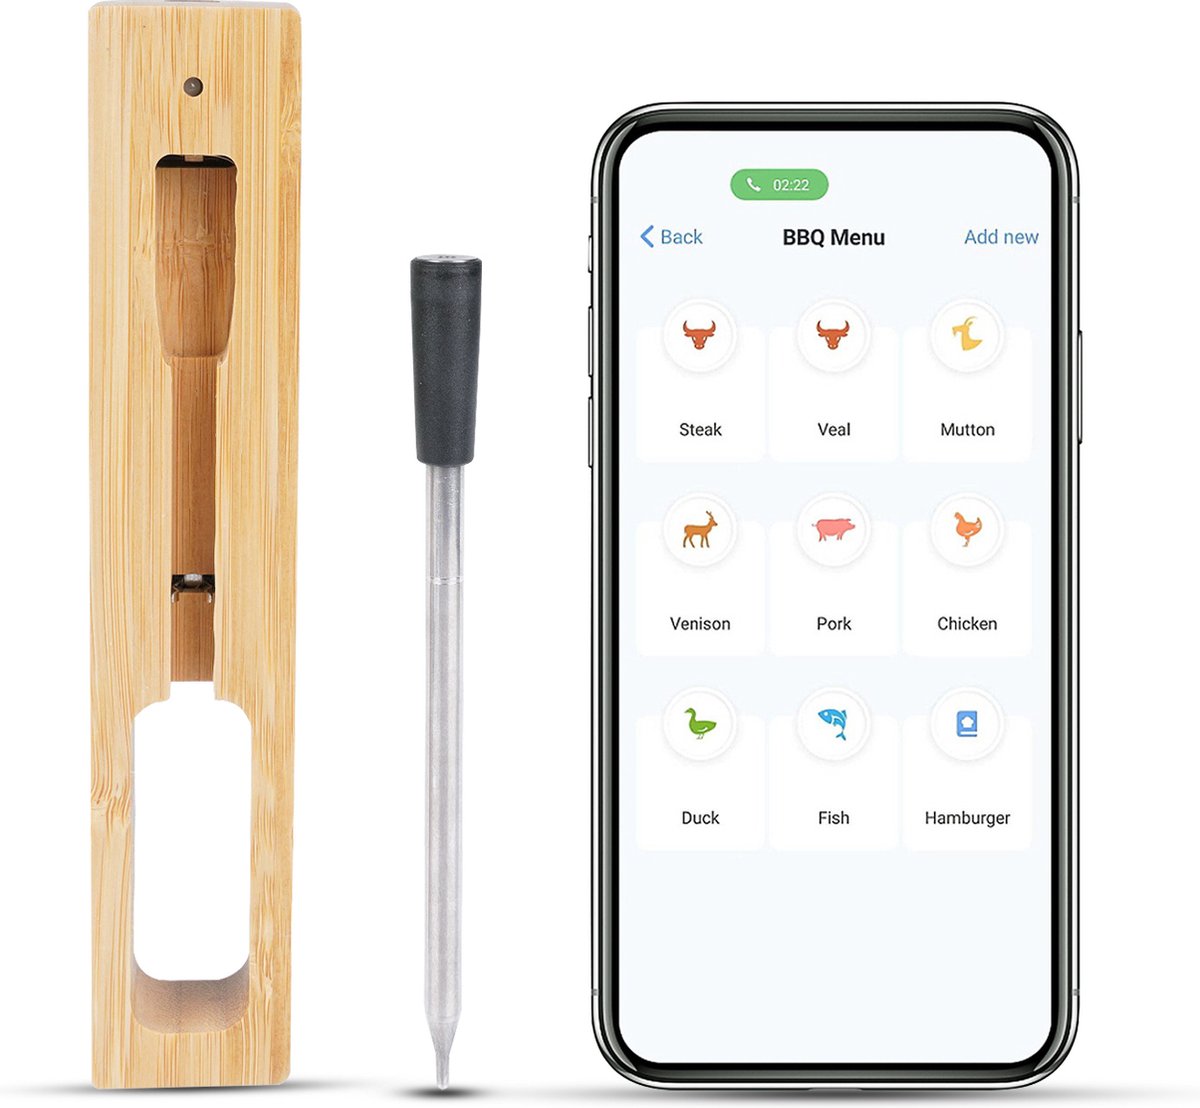 Mancor Vleesthermometer Met Bluetooth en App - BBQ Accessoires Thermometer - Keukenthermometer Digitaal - Mancor